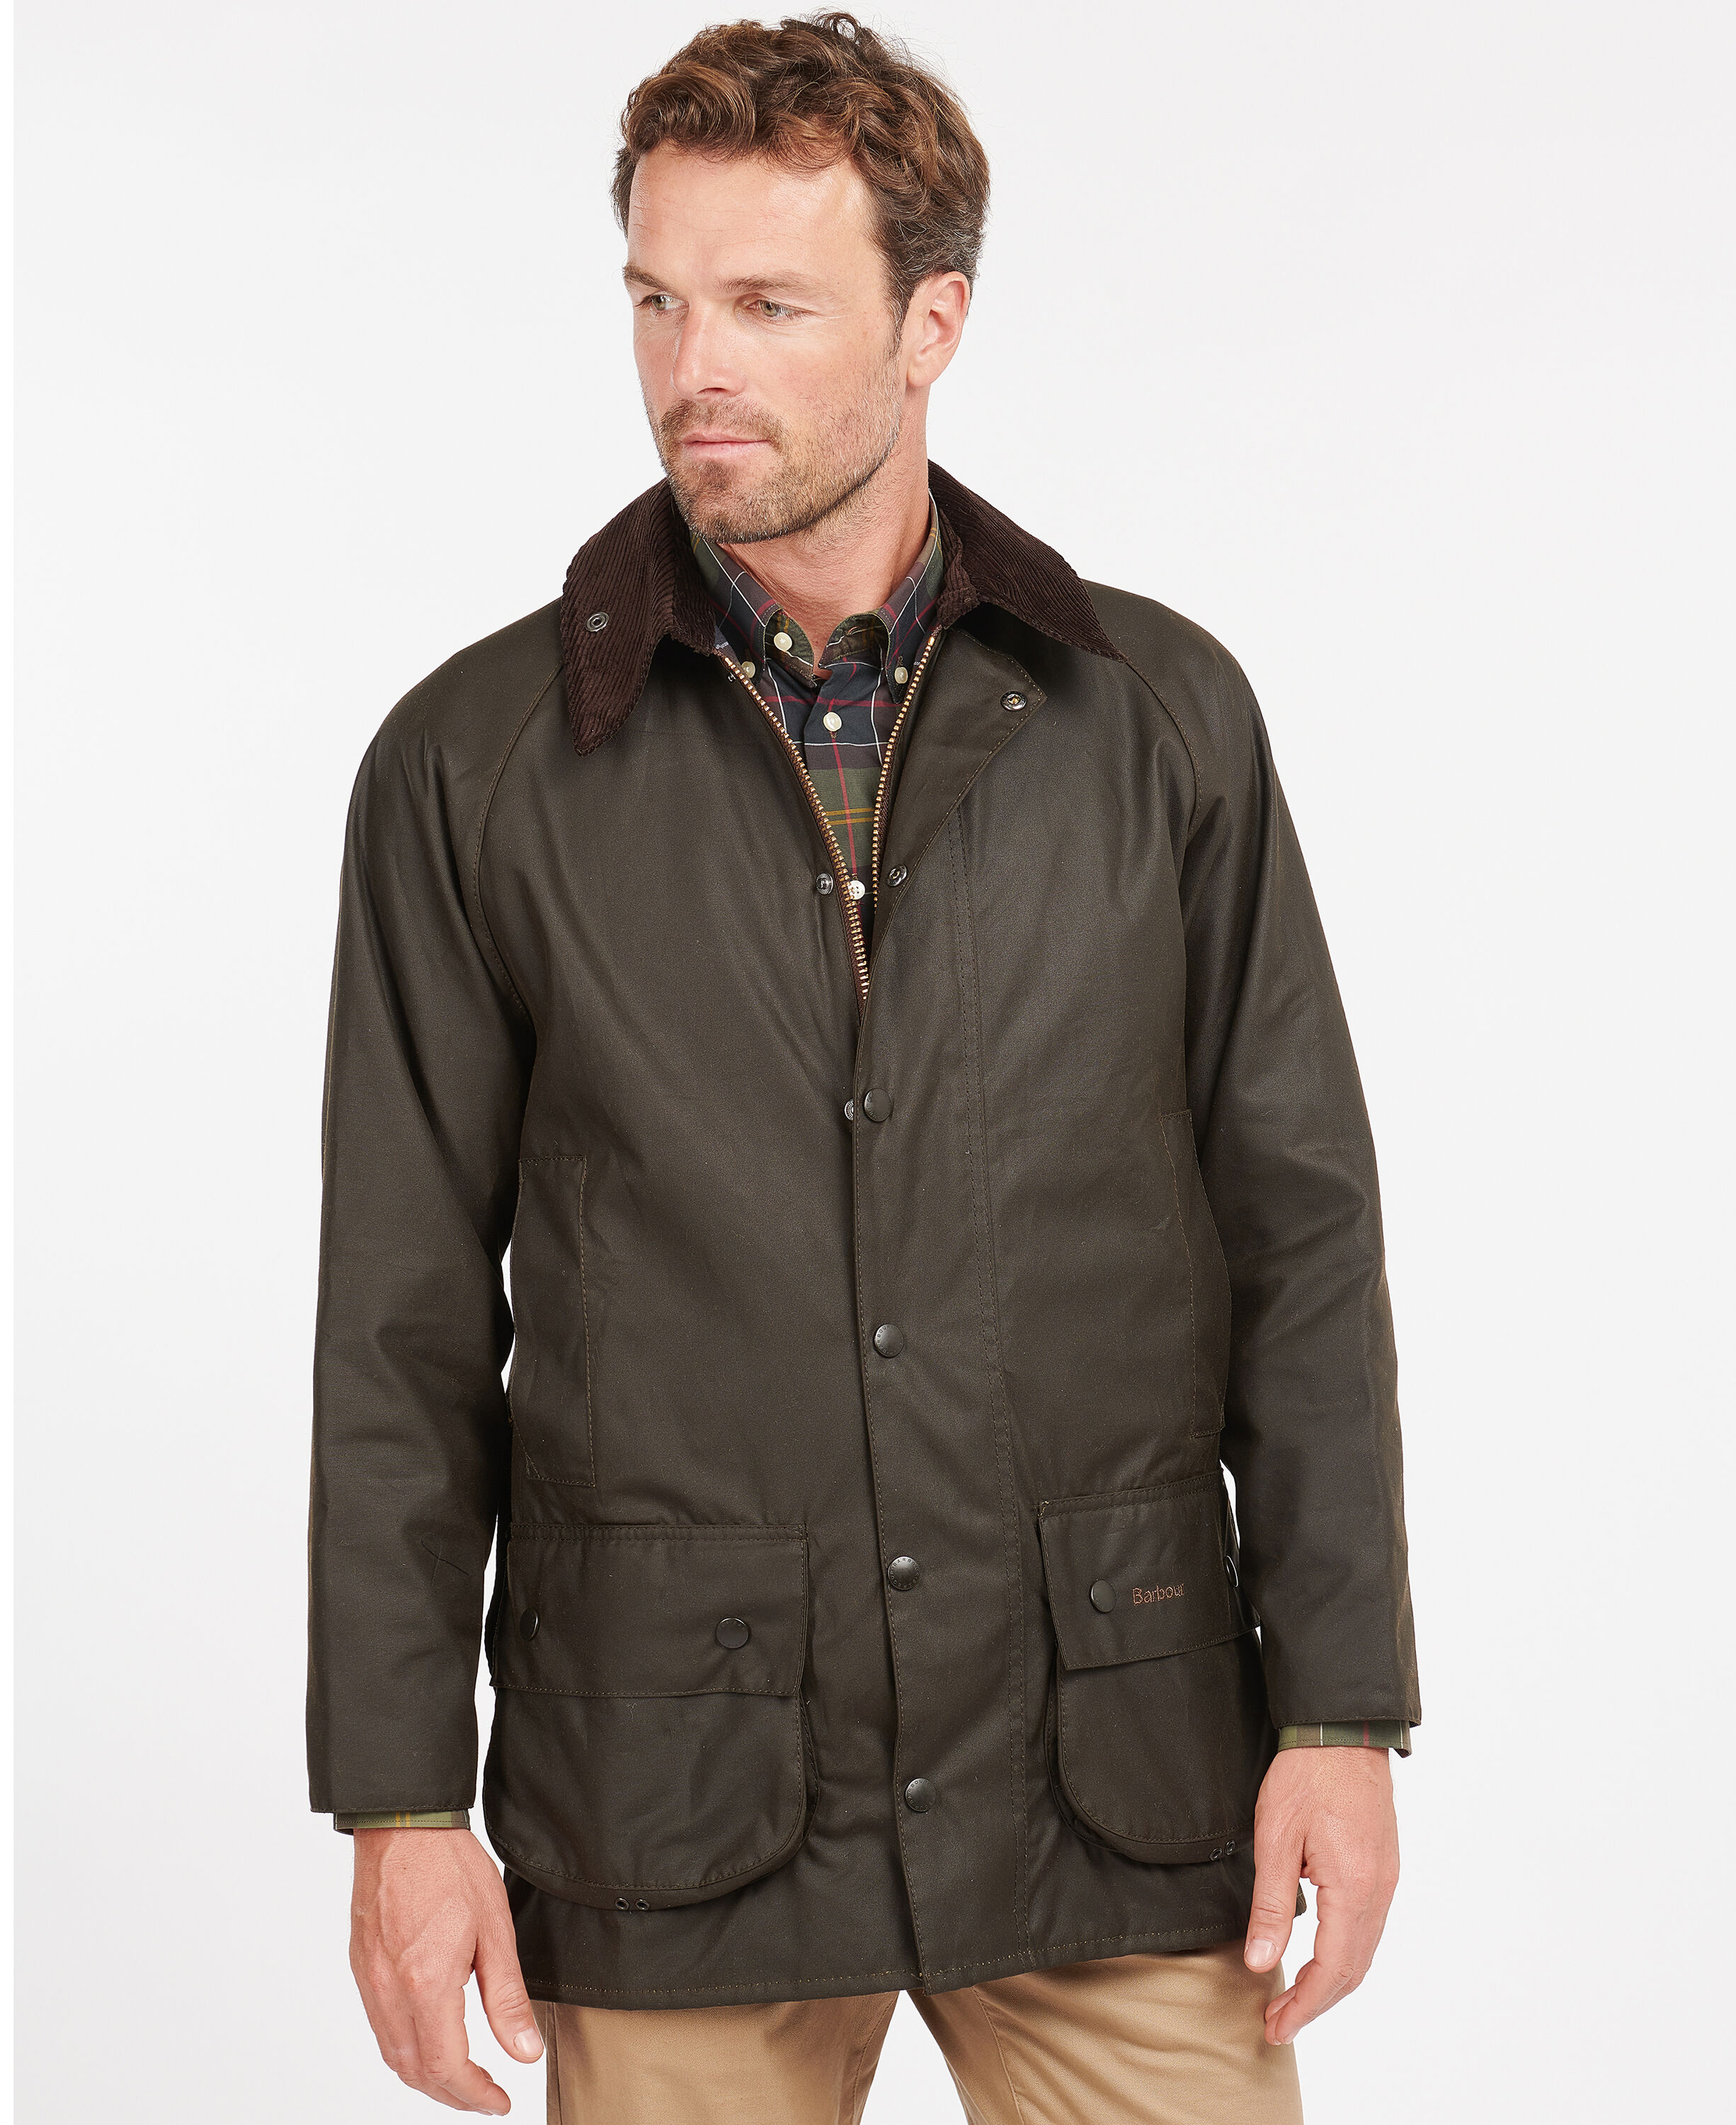 Barbour Barbour classic beaufort wax jacket olive - size 38 Coats & Jackets